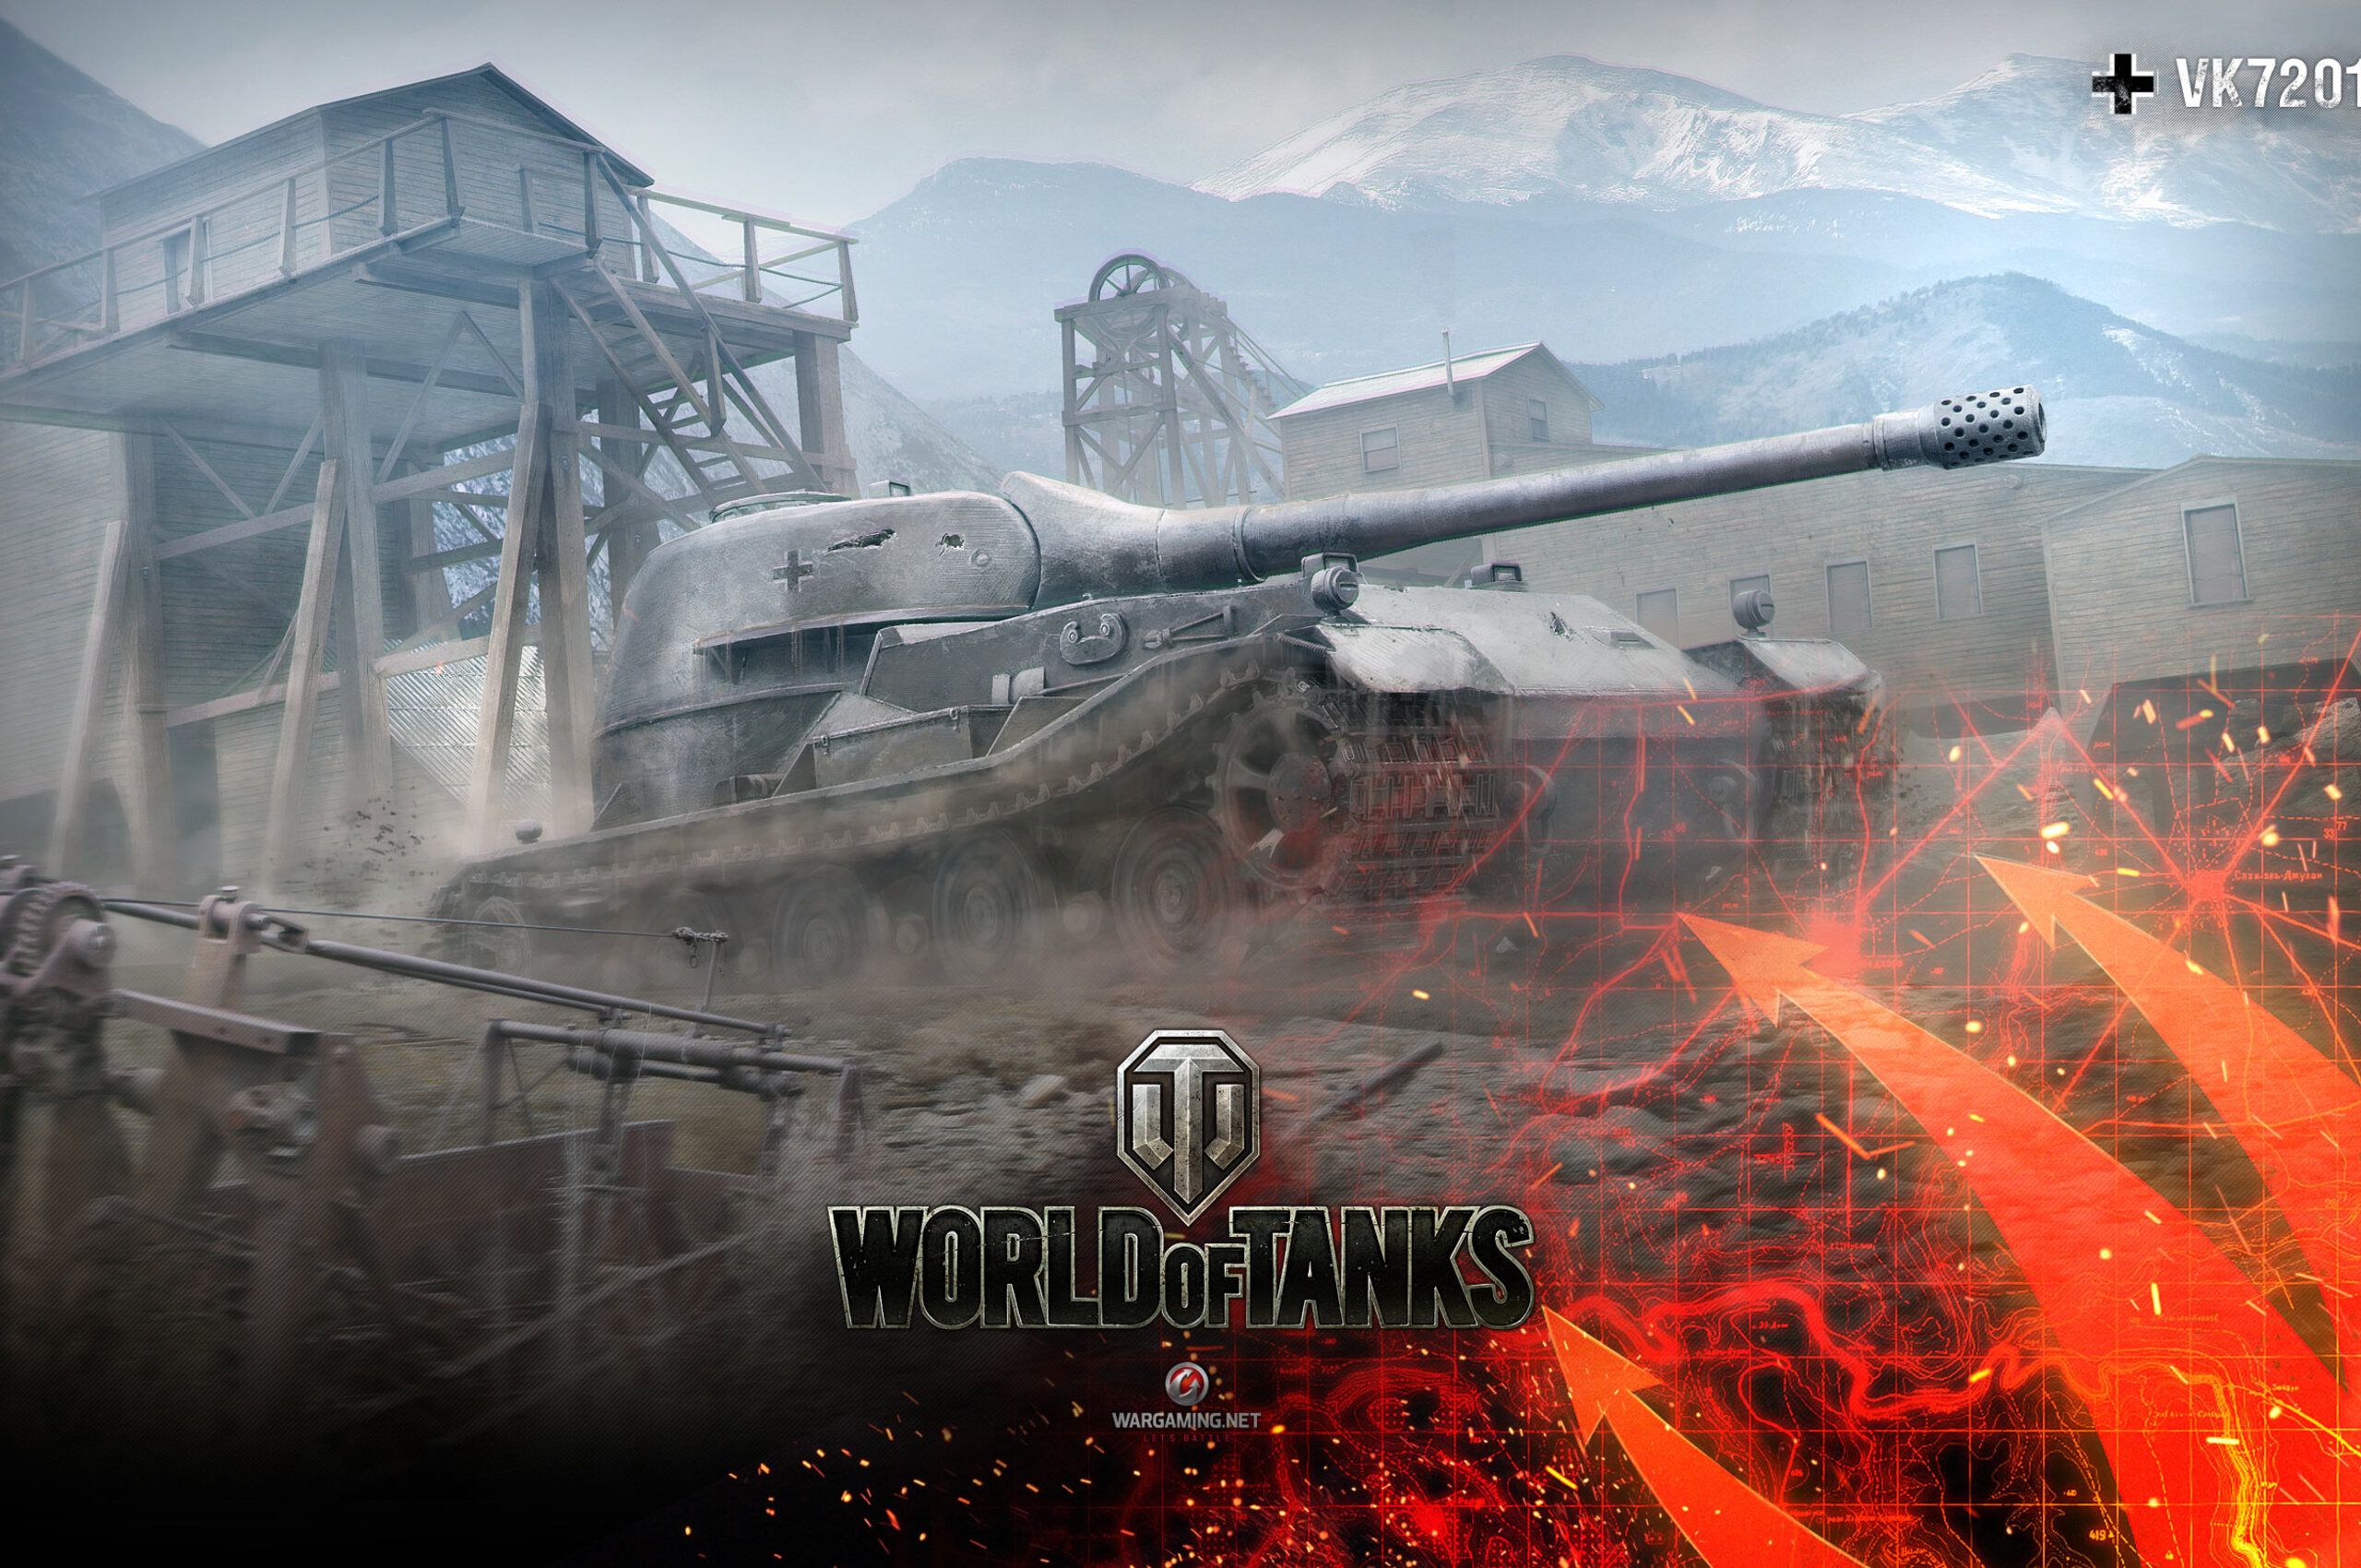 Wot apk. Танк World of Tanks. World of Tanks Постер. Постеры танков World of Tanks. ВК 72.01 К вот блиц.